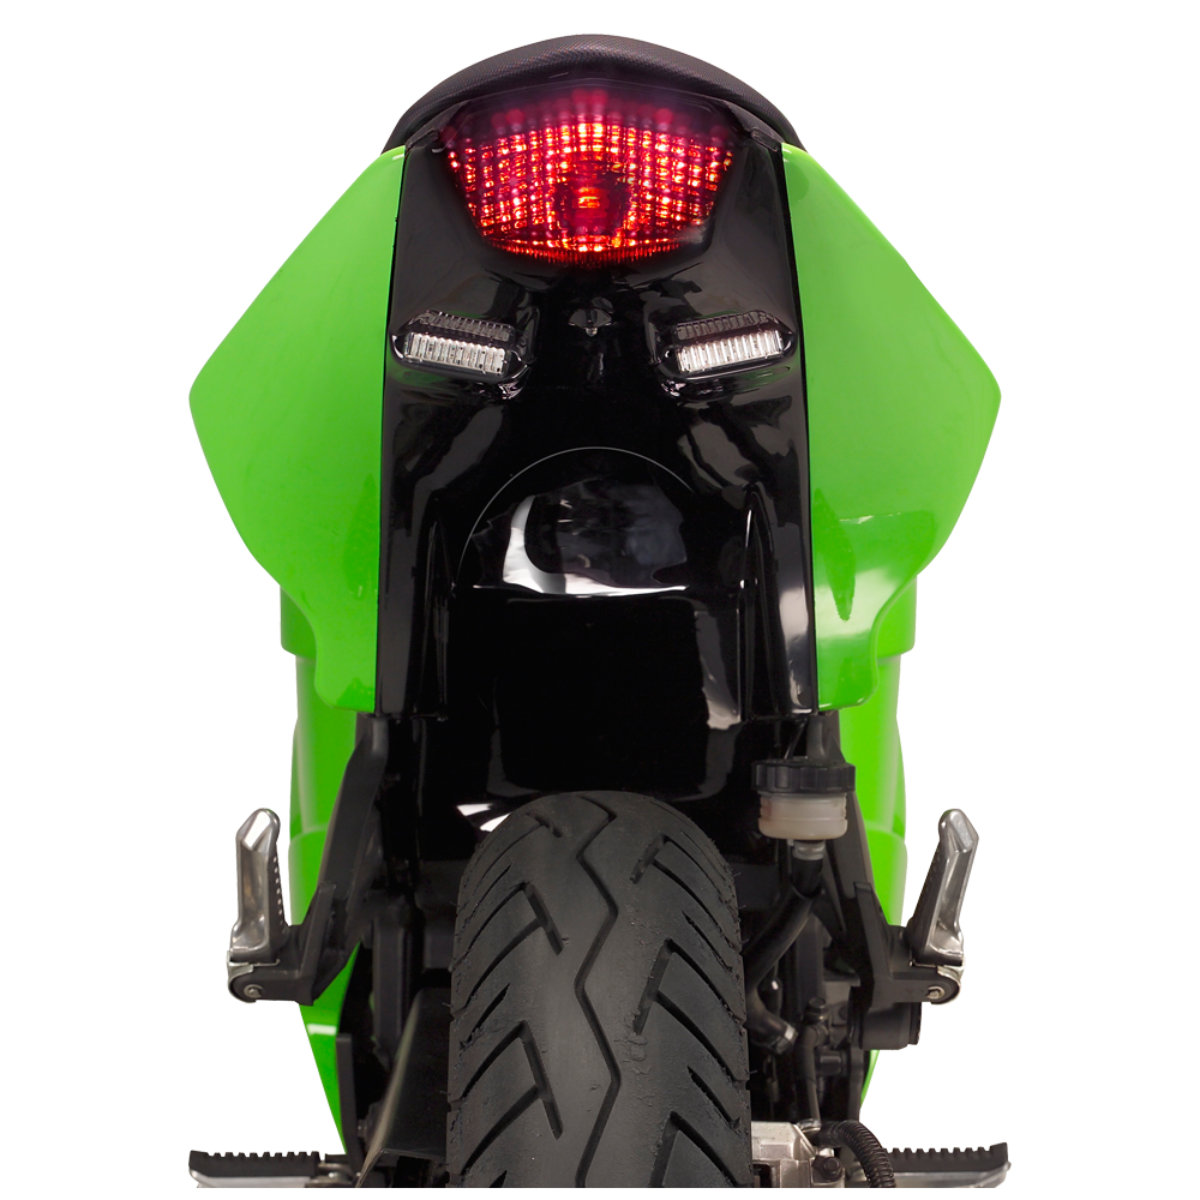 Hotbodies Racing Undertail for Kawasaki Ninja 250R 2012, Candy Lime Green